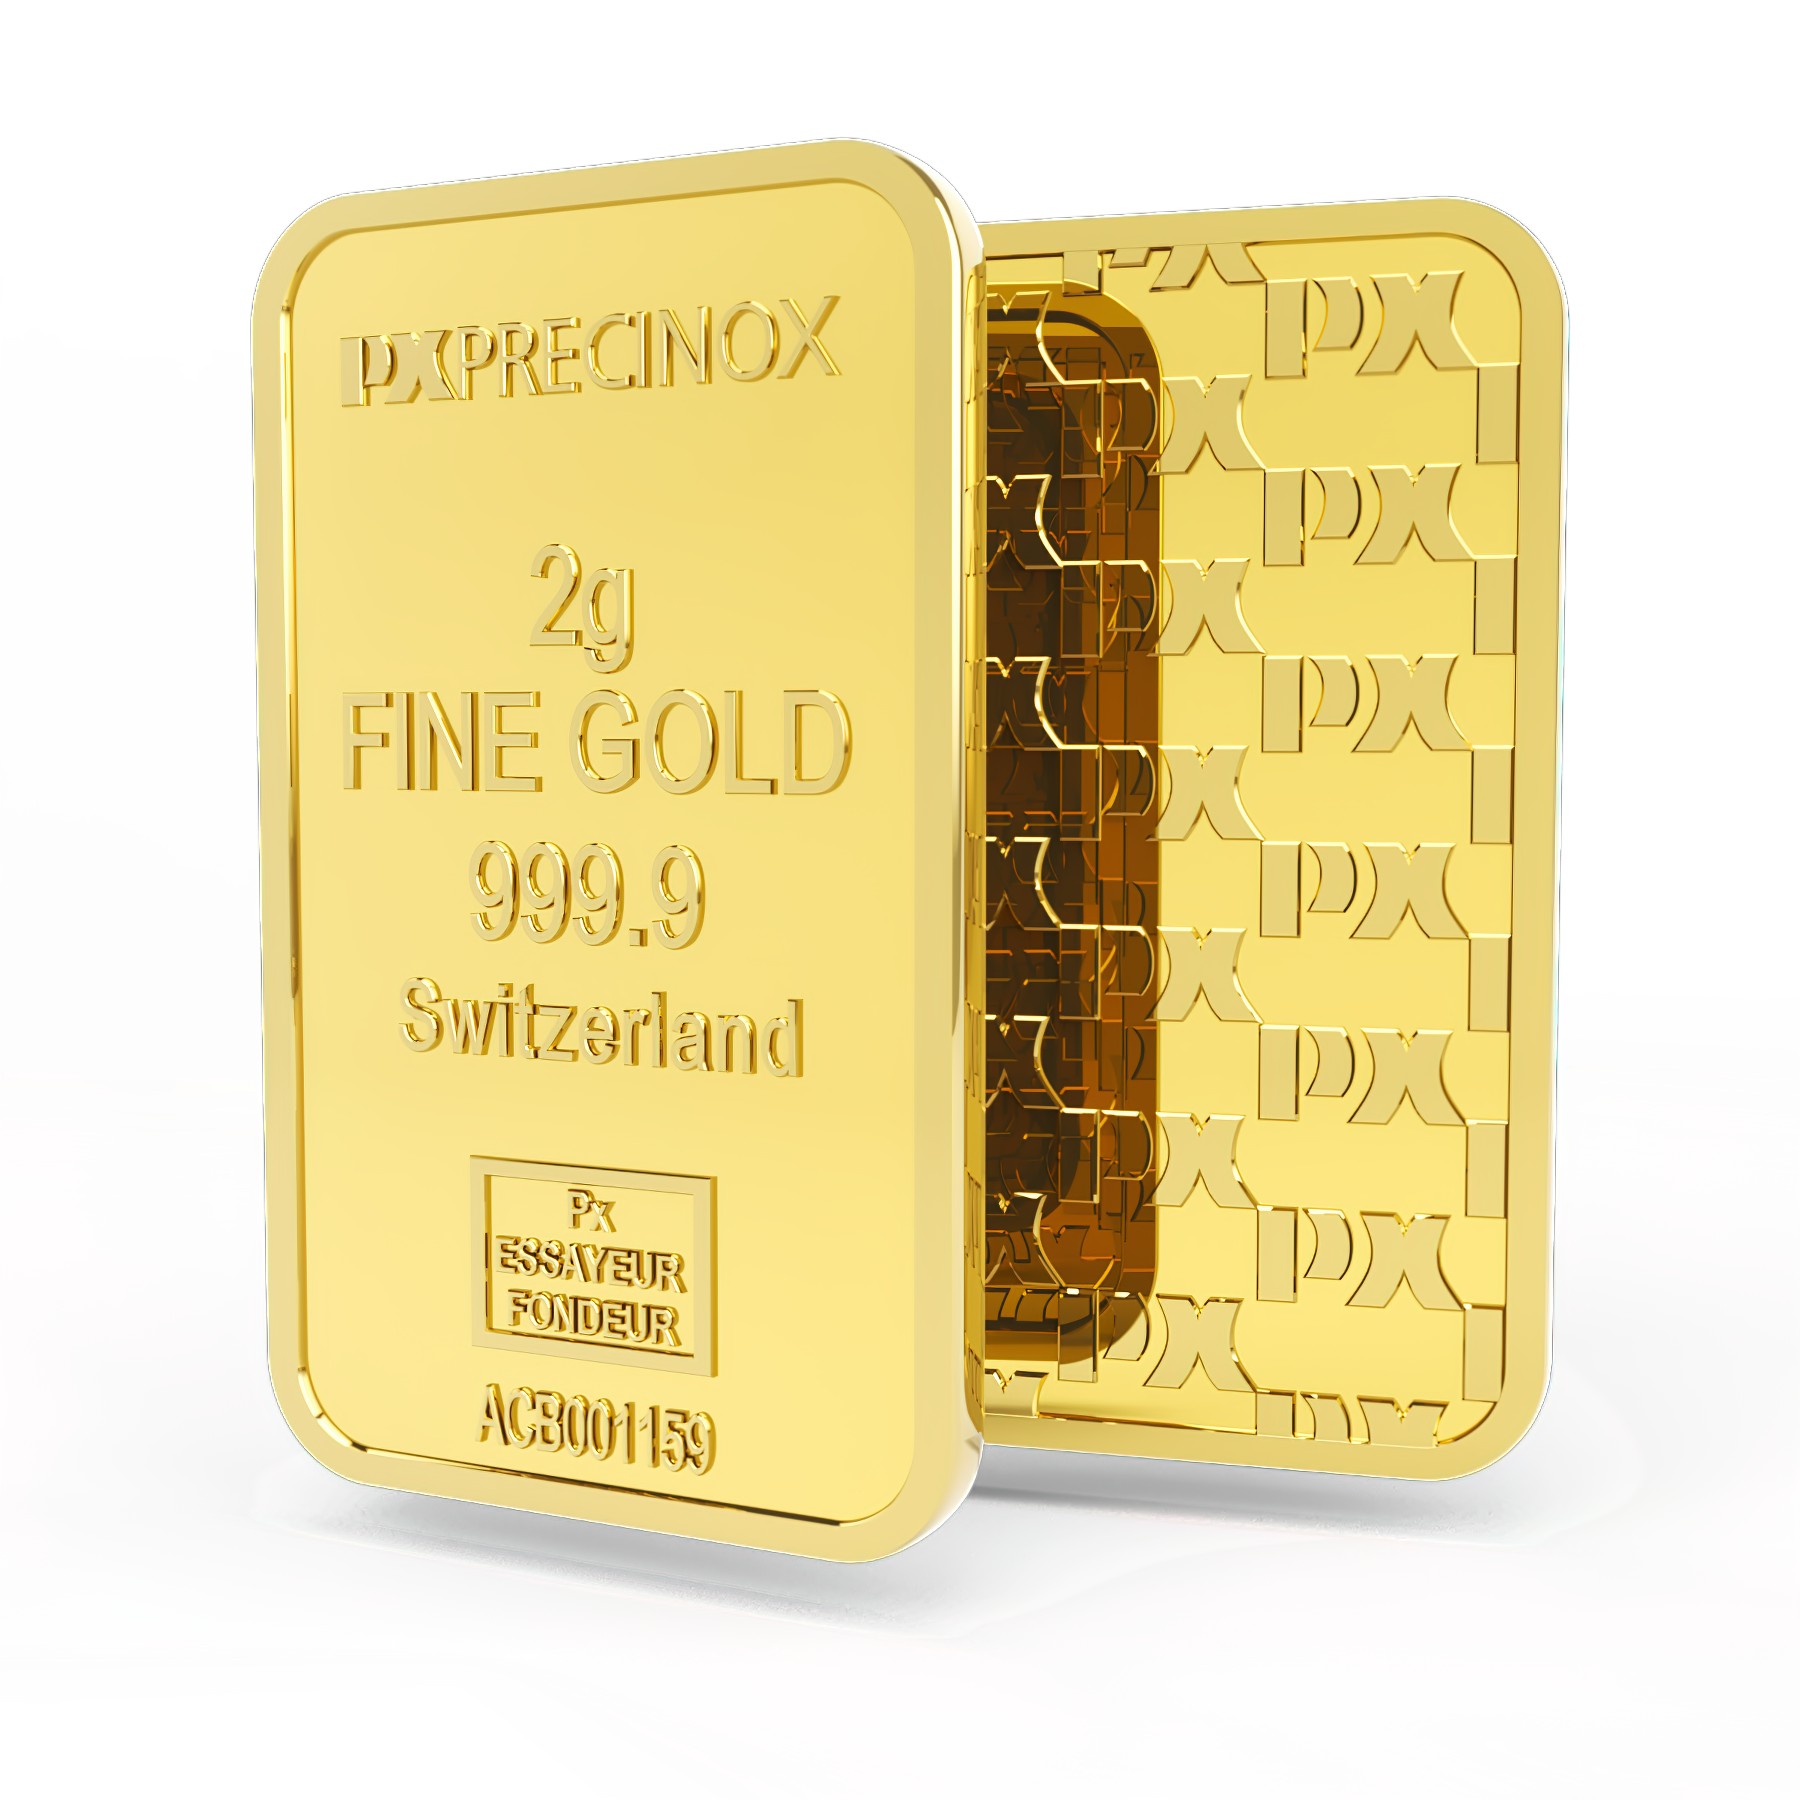 Aranyrúd 2 gr, Svájc, Fine Gold 999,9